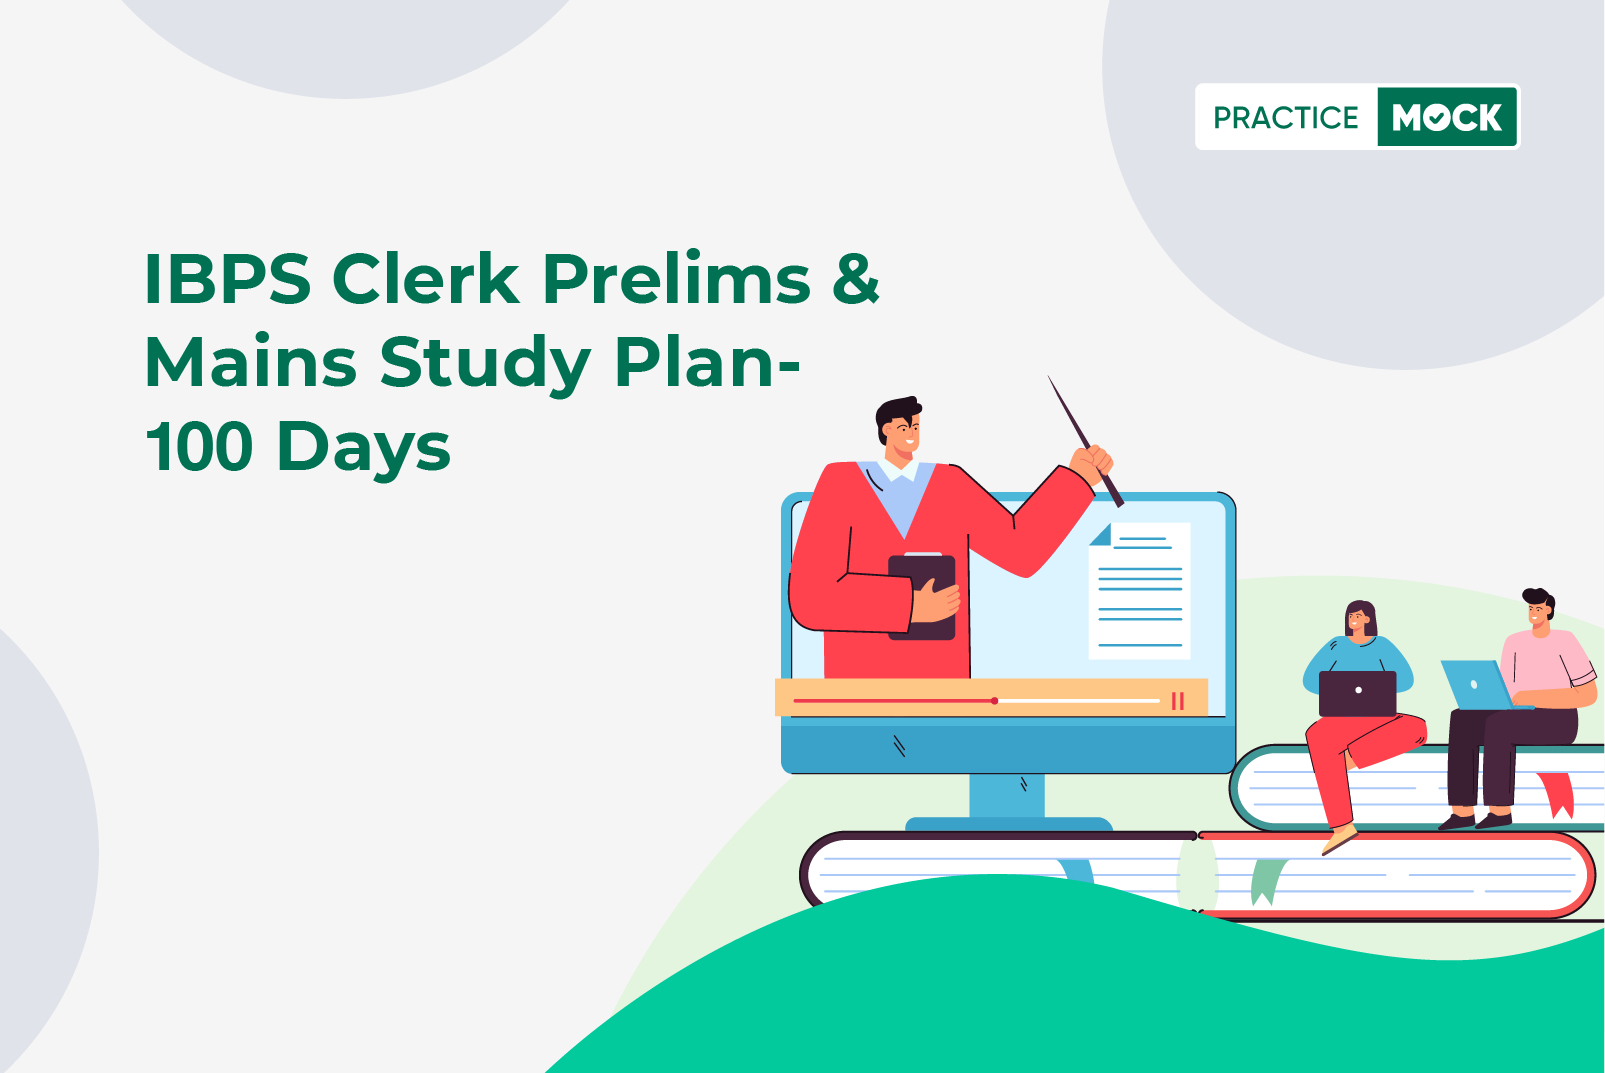 IBPS Clerk Prelims & Mains Study Plan -100 Days